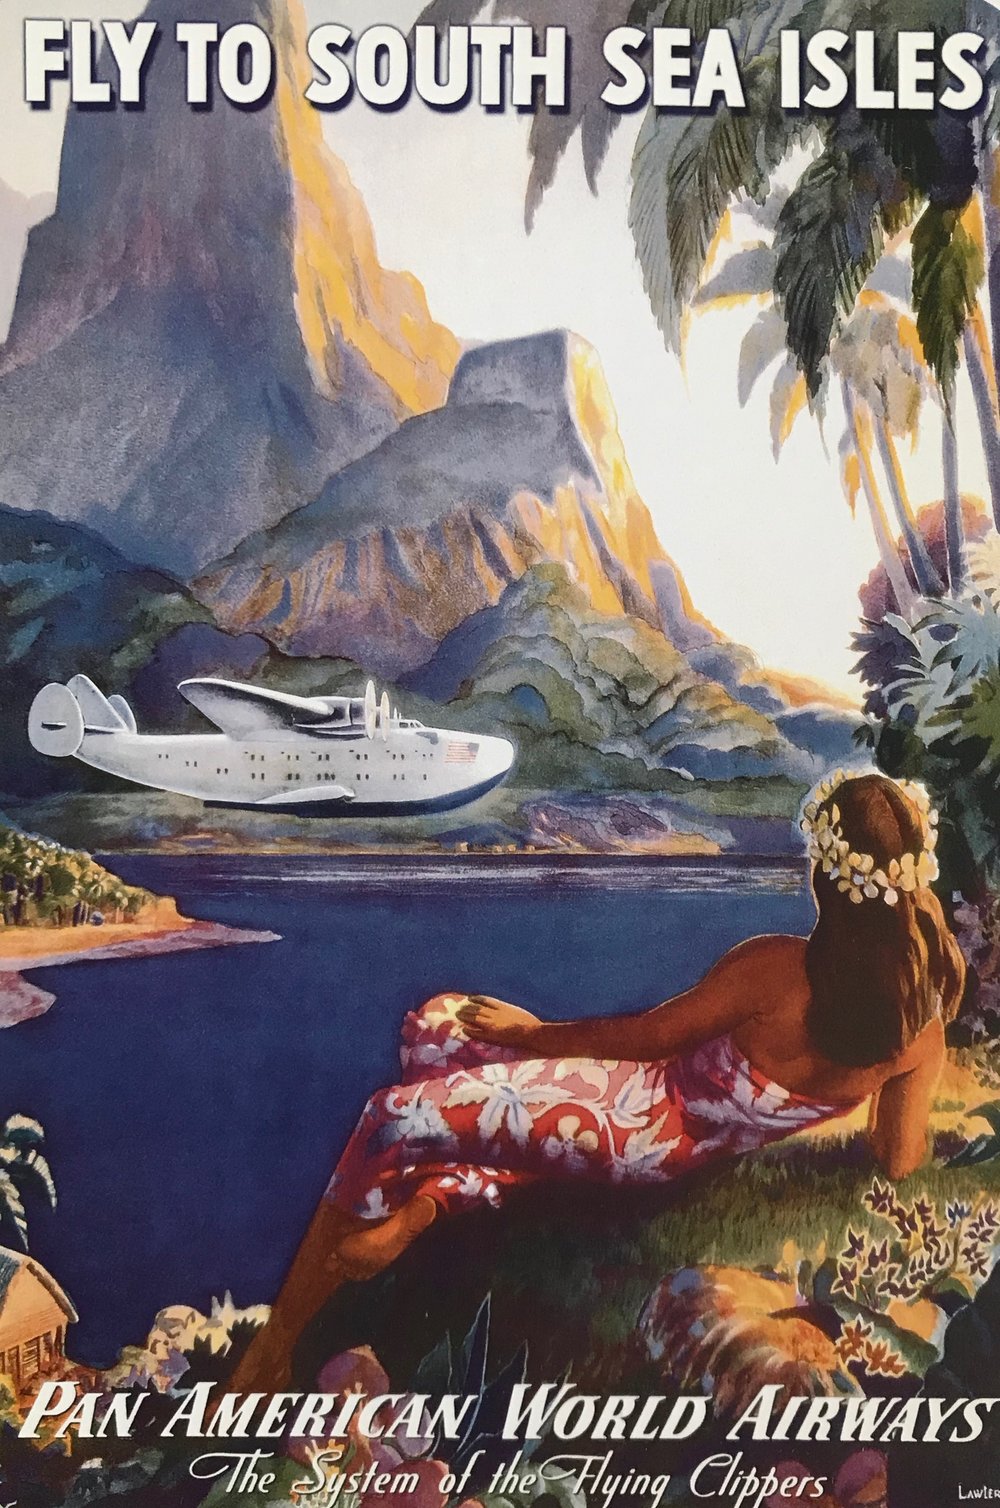 1960s Vintage Travel Poster Print Northwest Orient Airlines HAWAIIAN ISLANDS